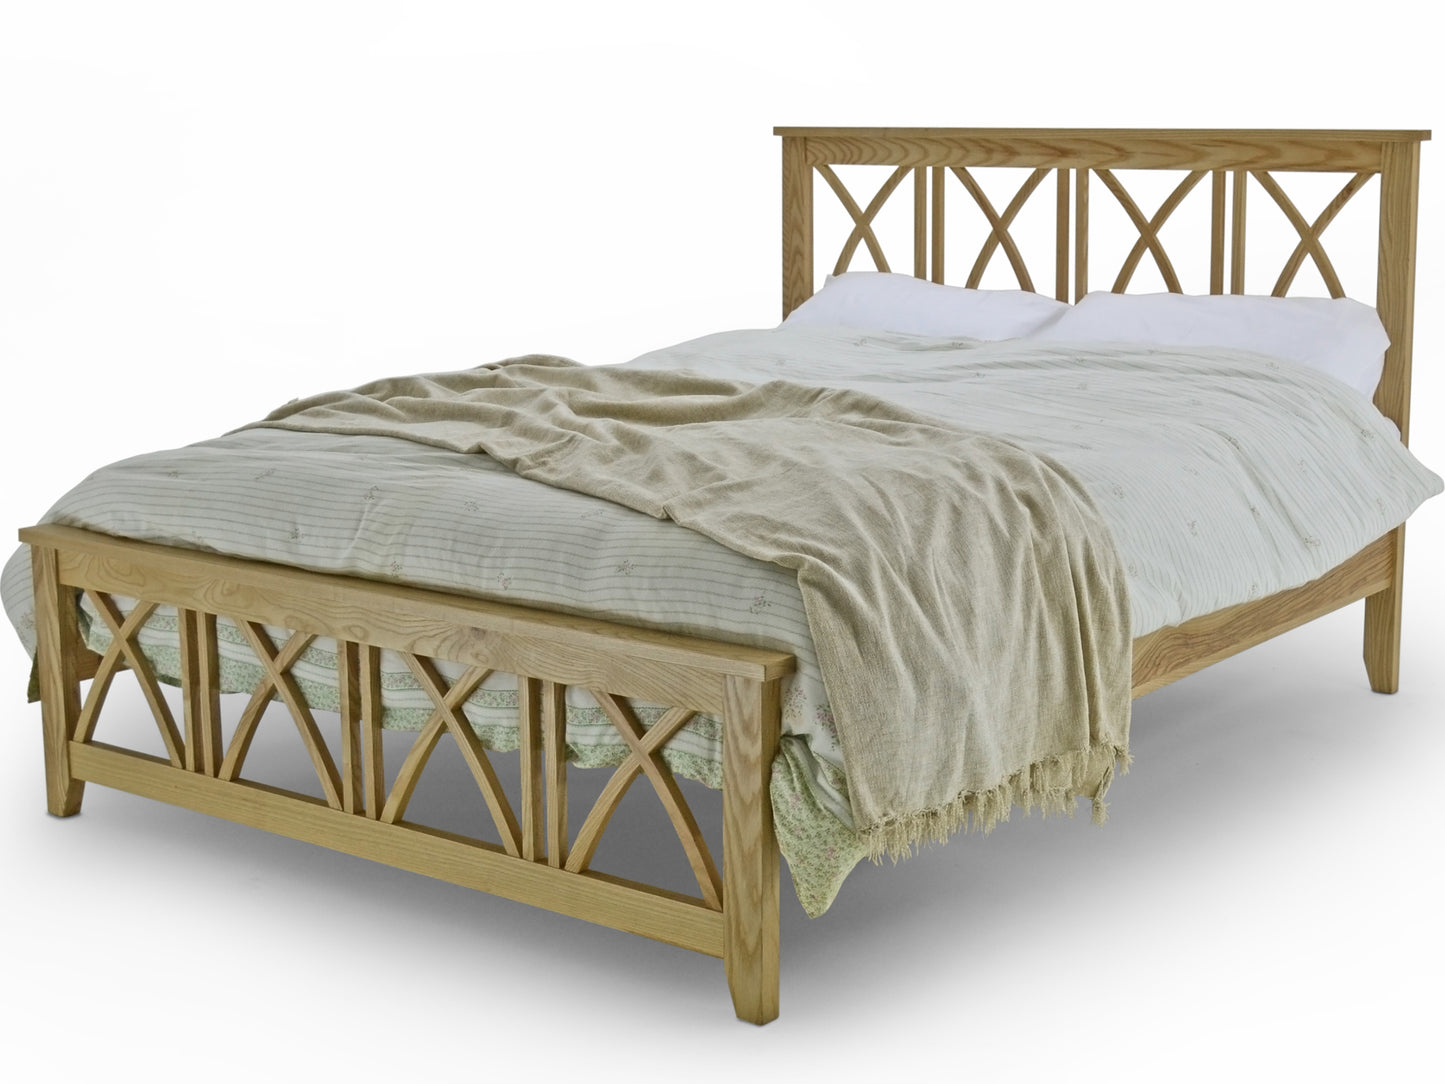 Asha Luxury Bed Frame in Solid Oak